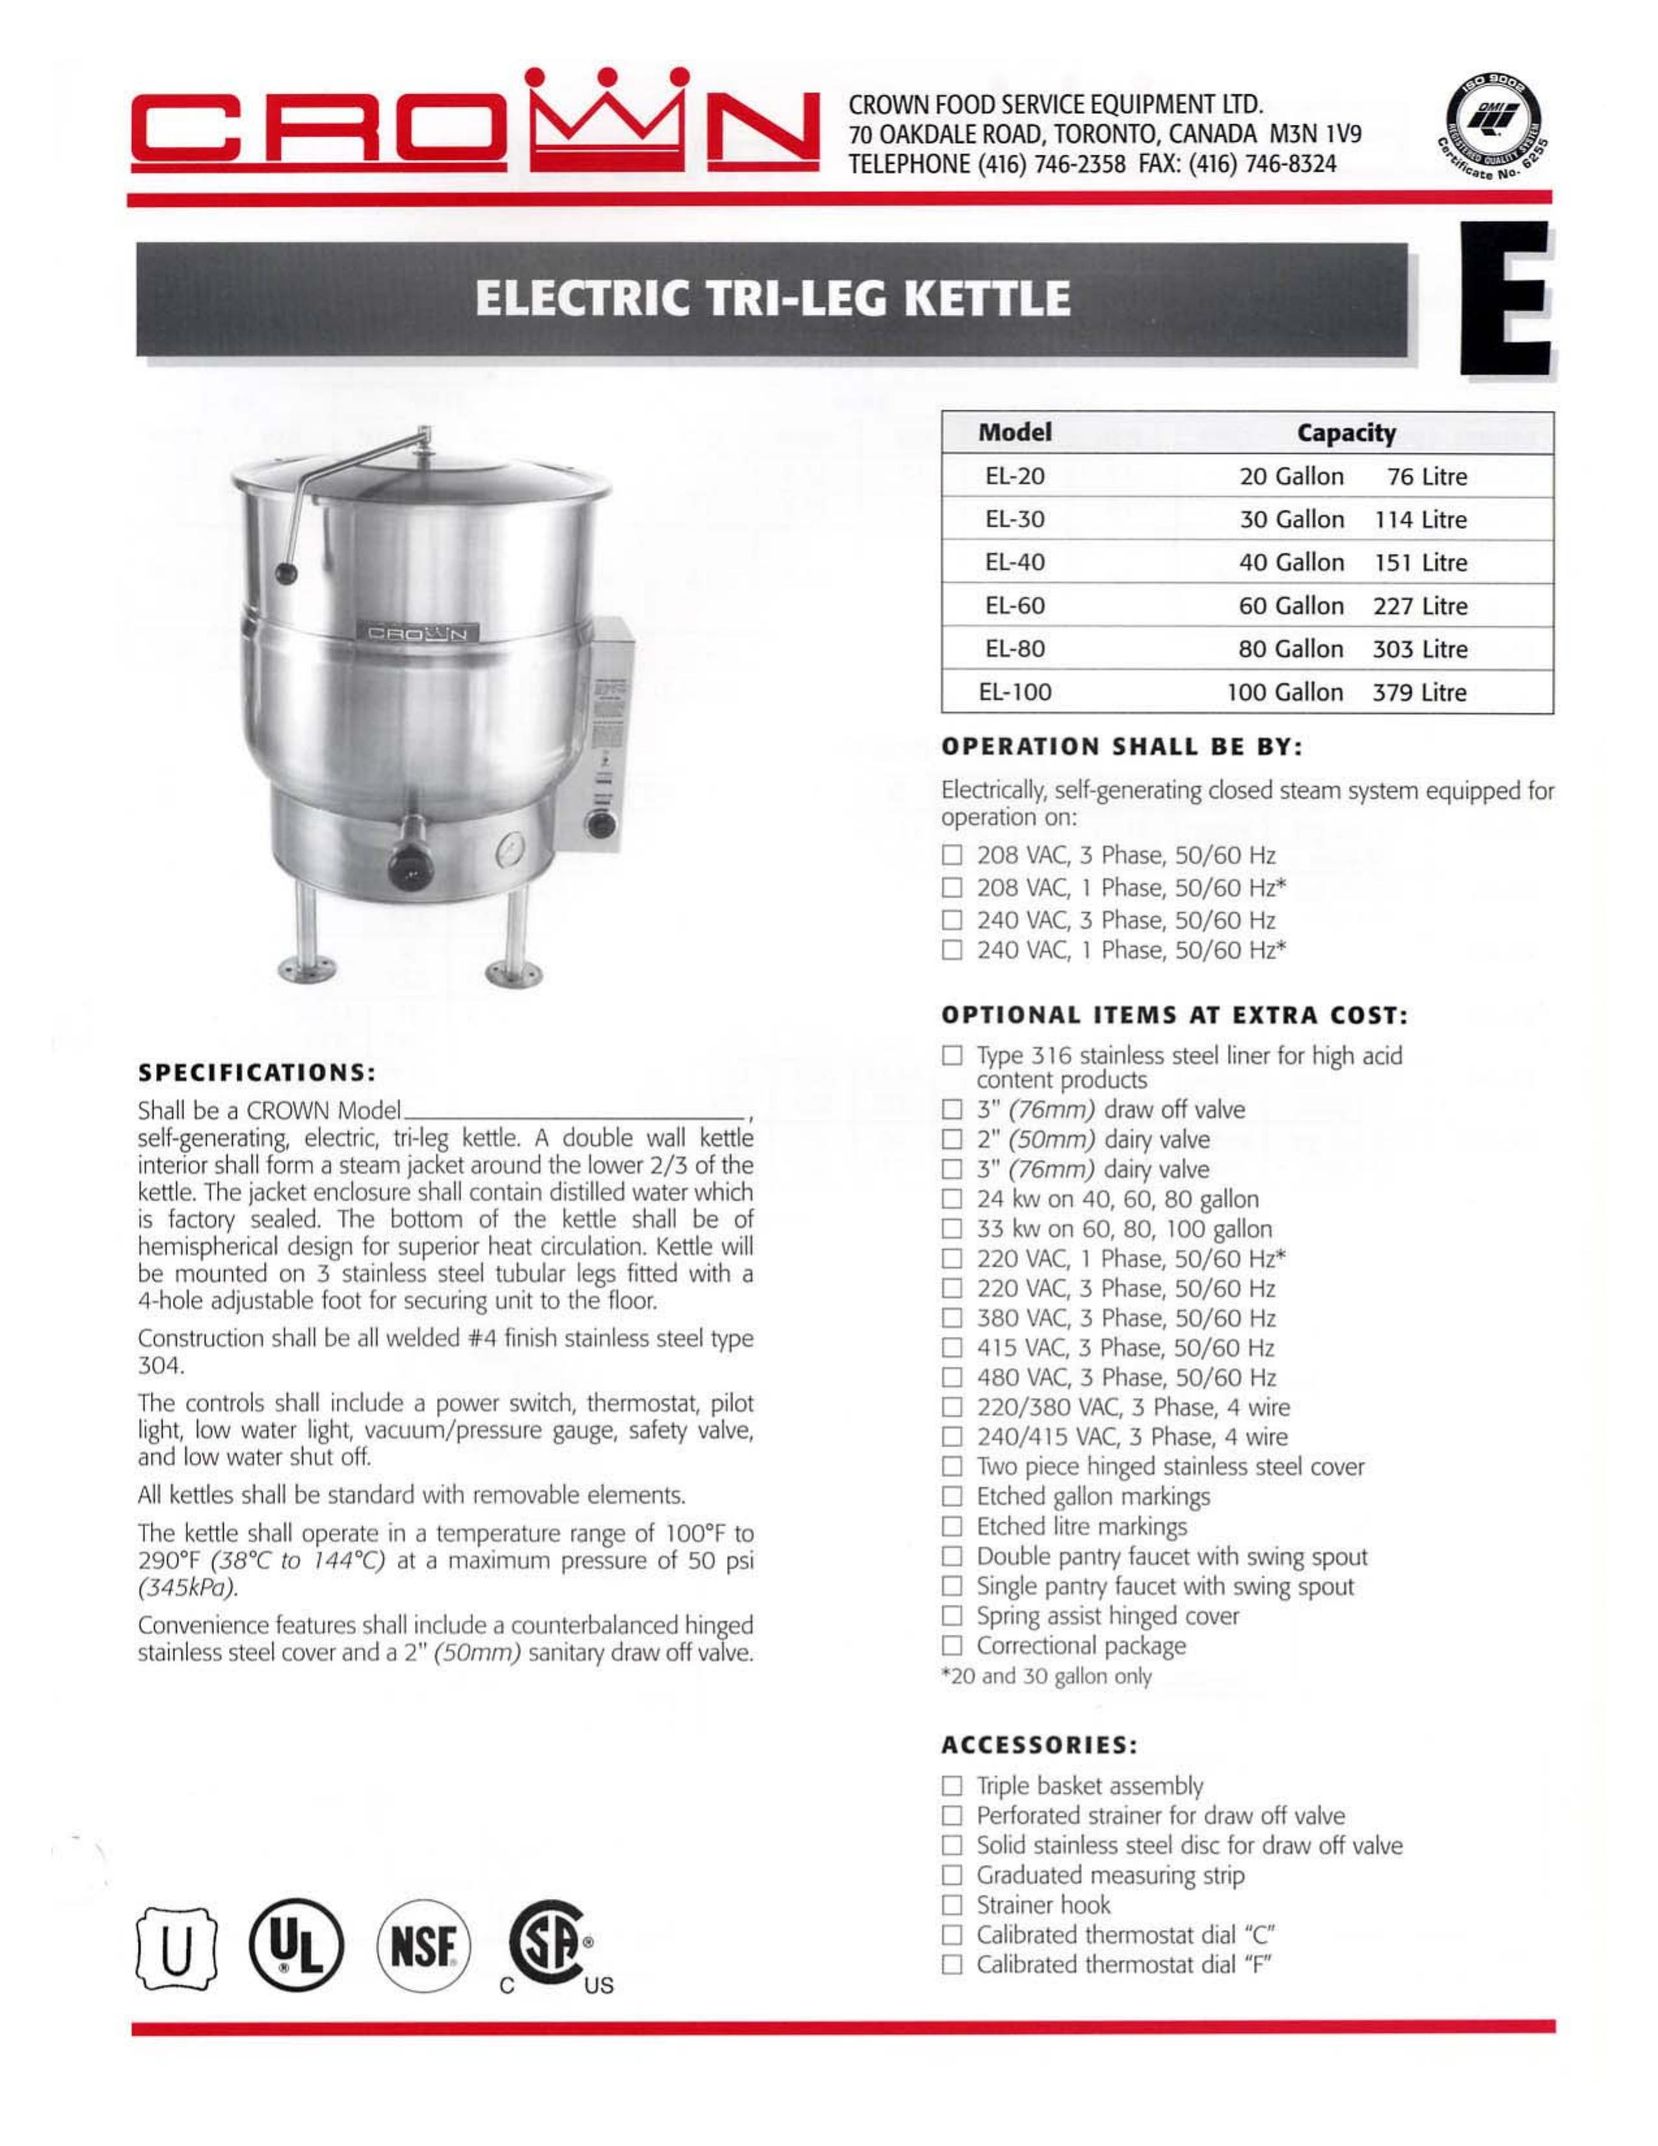 Crown Equipment EL-80 Hot Beverage Maker User Manual